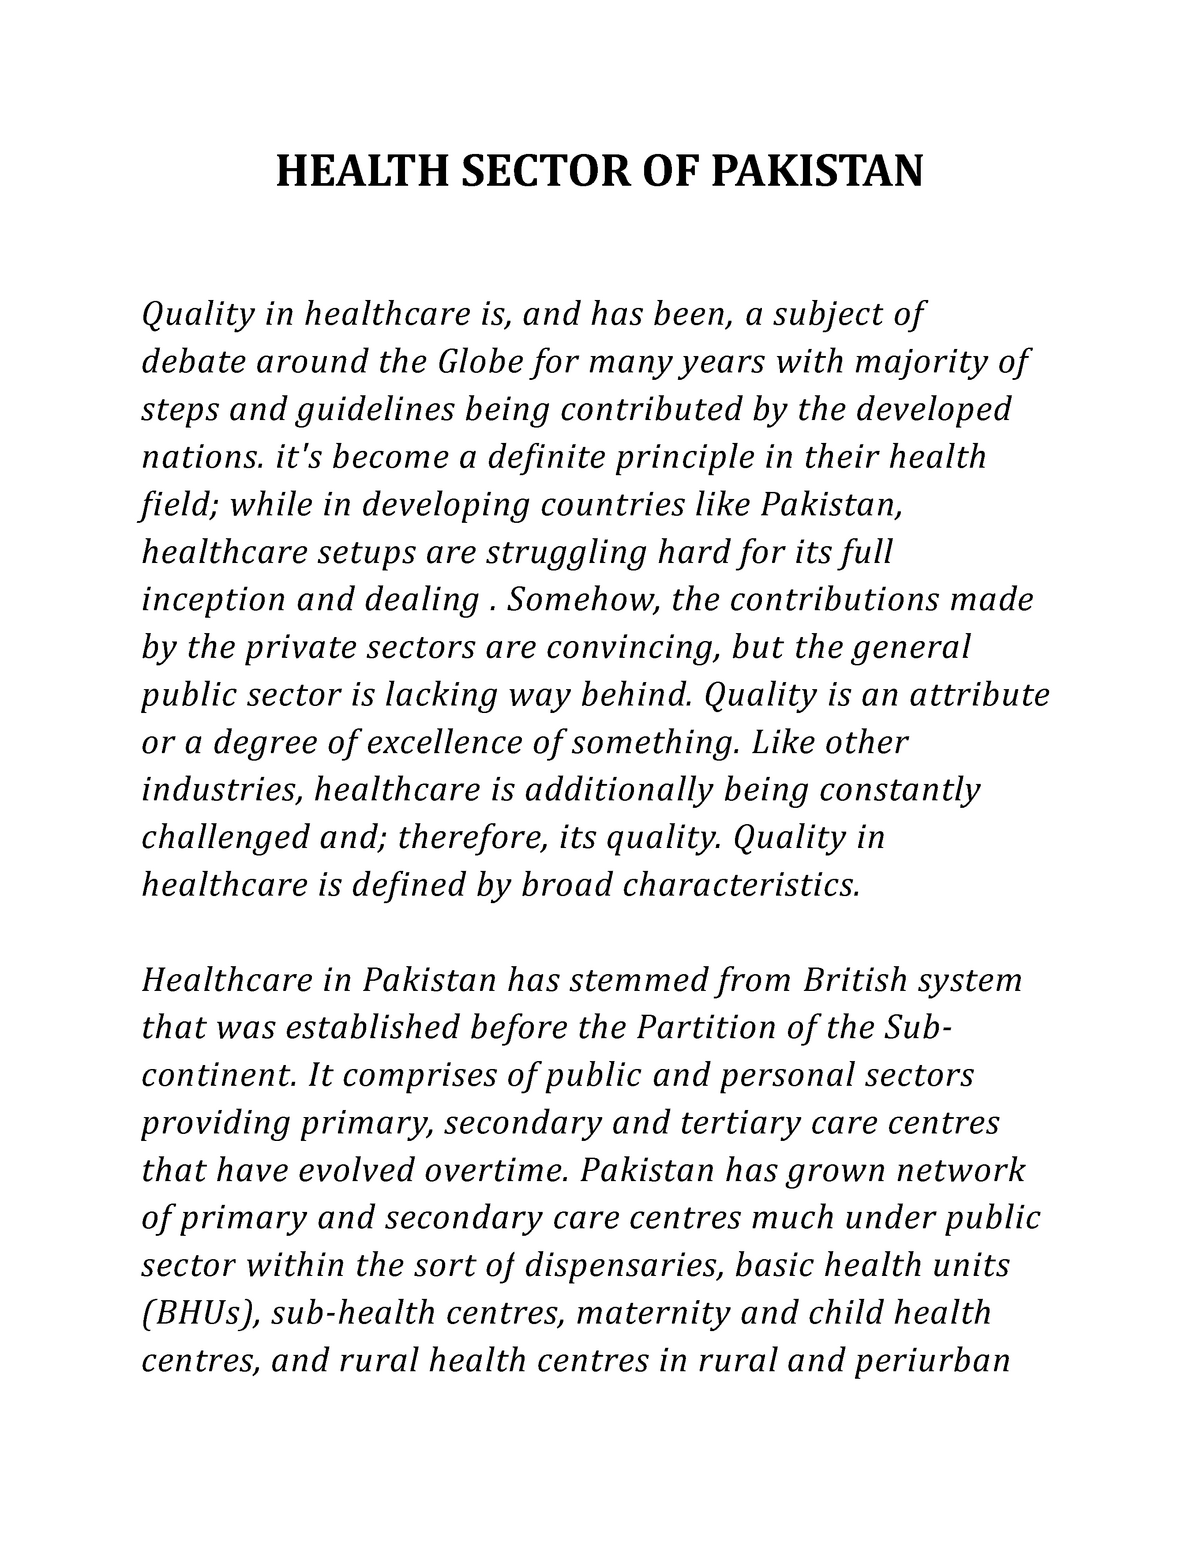 essay on health sector in pakistan